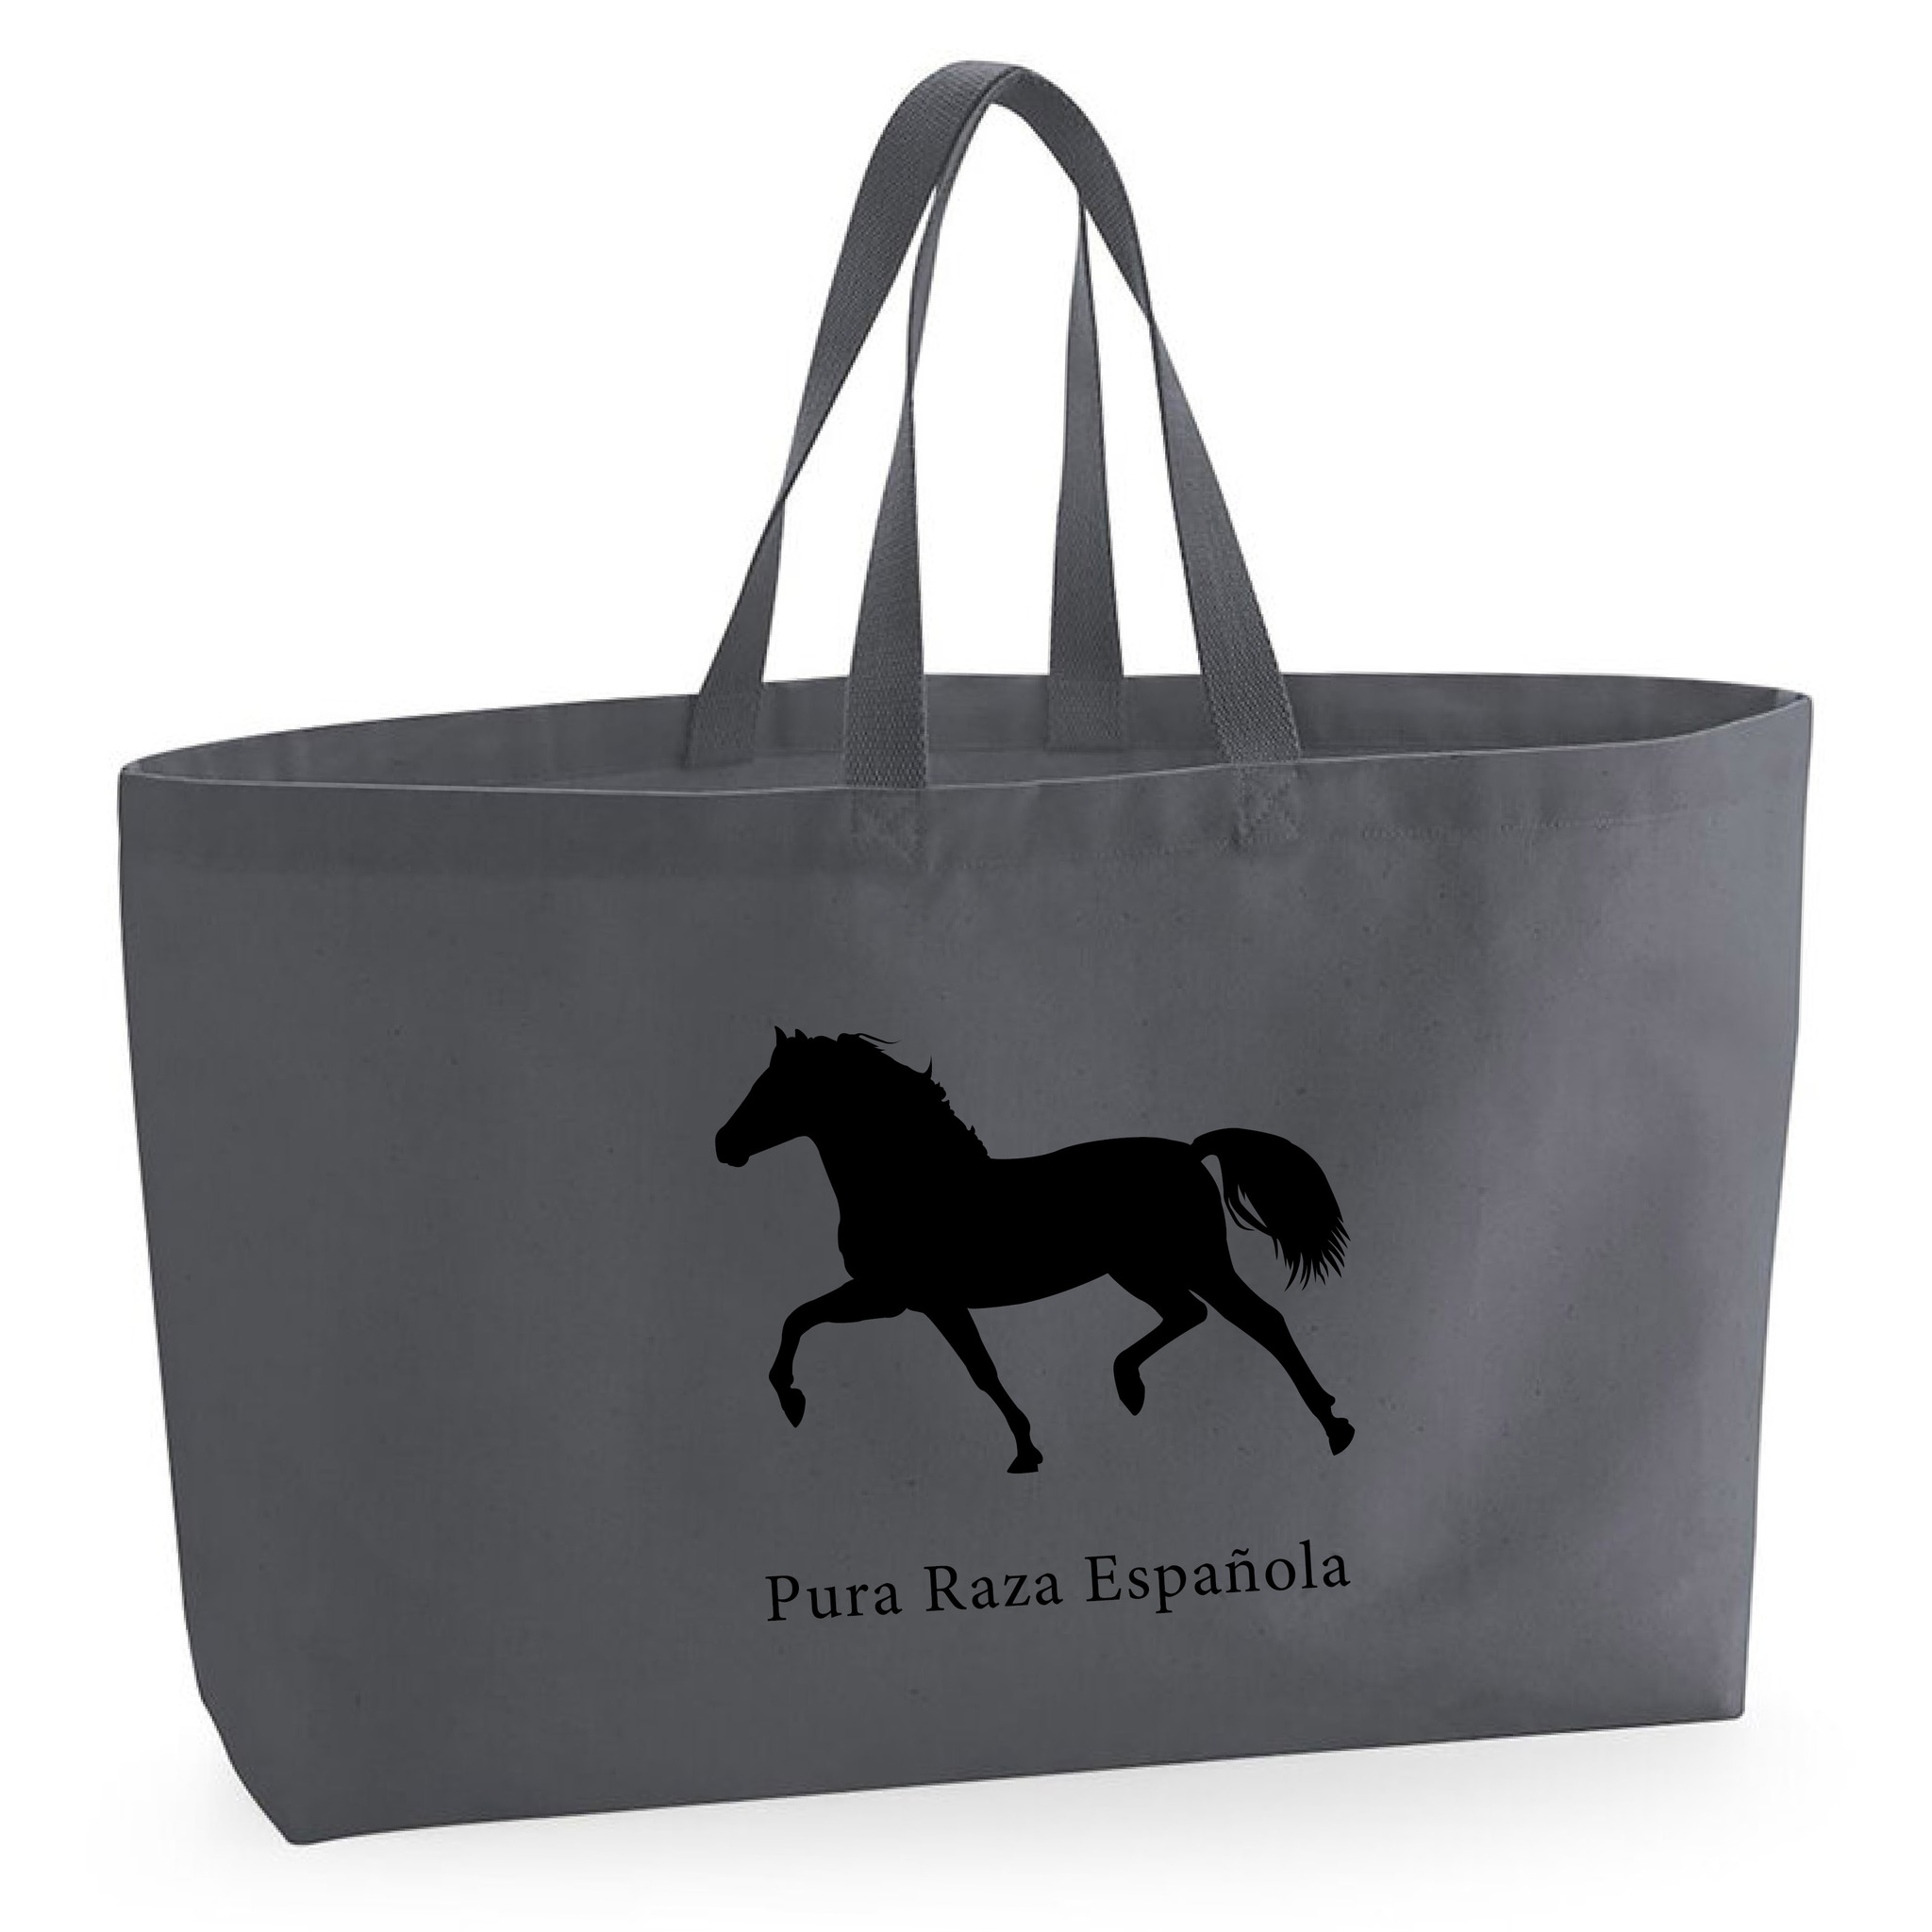 Tygkasse Pura Raza Española - Oversized bag